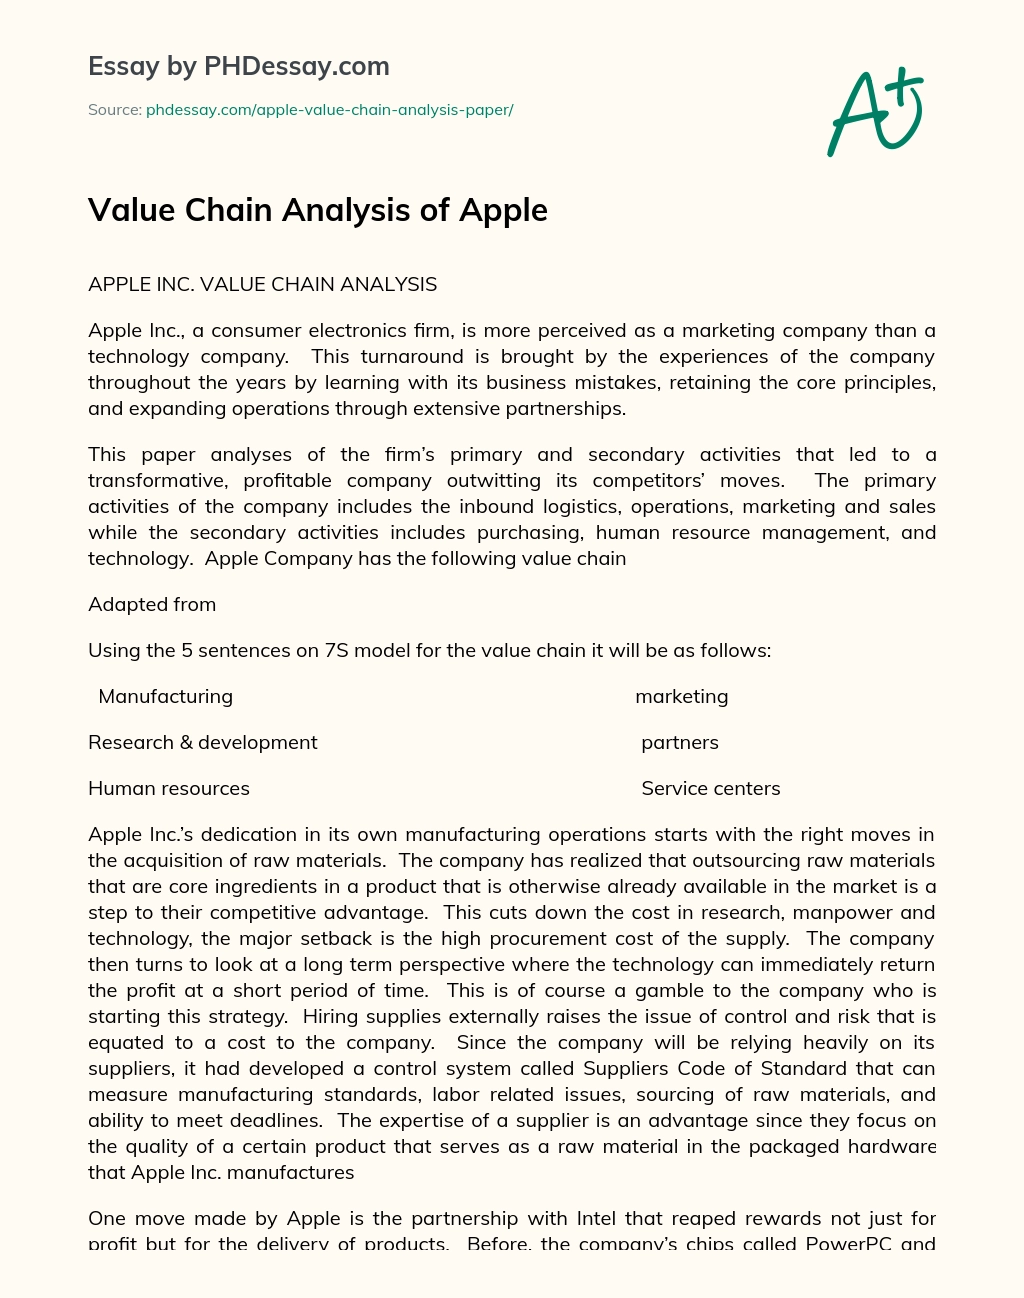 Value Chain Analysis of Apple essay